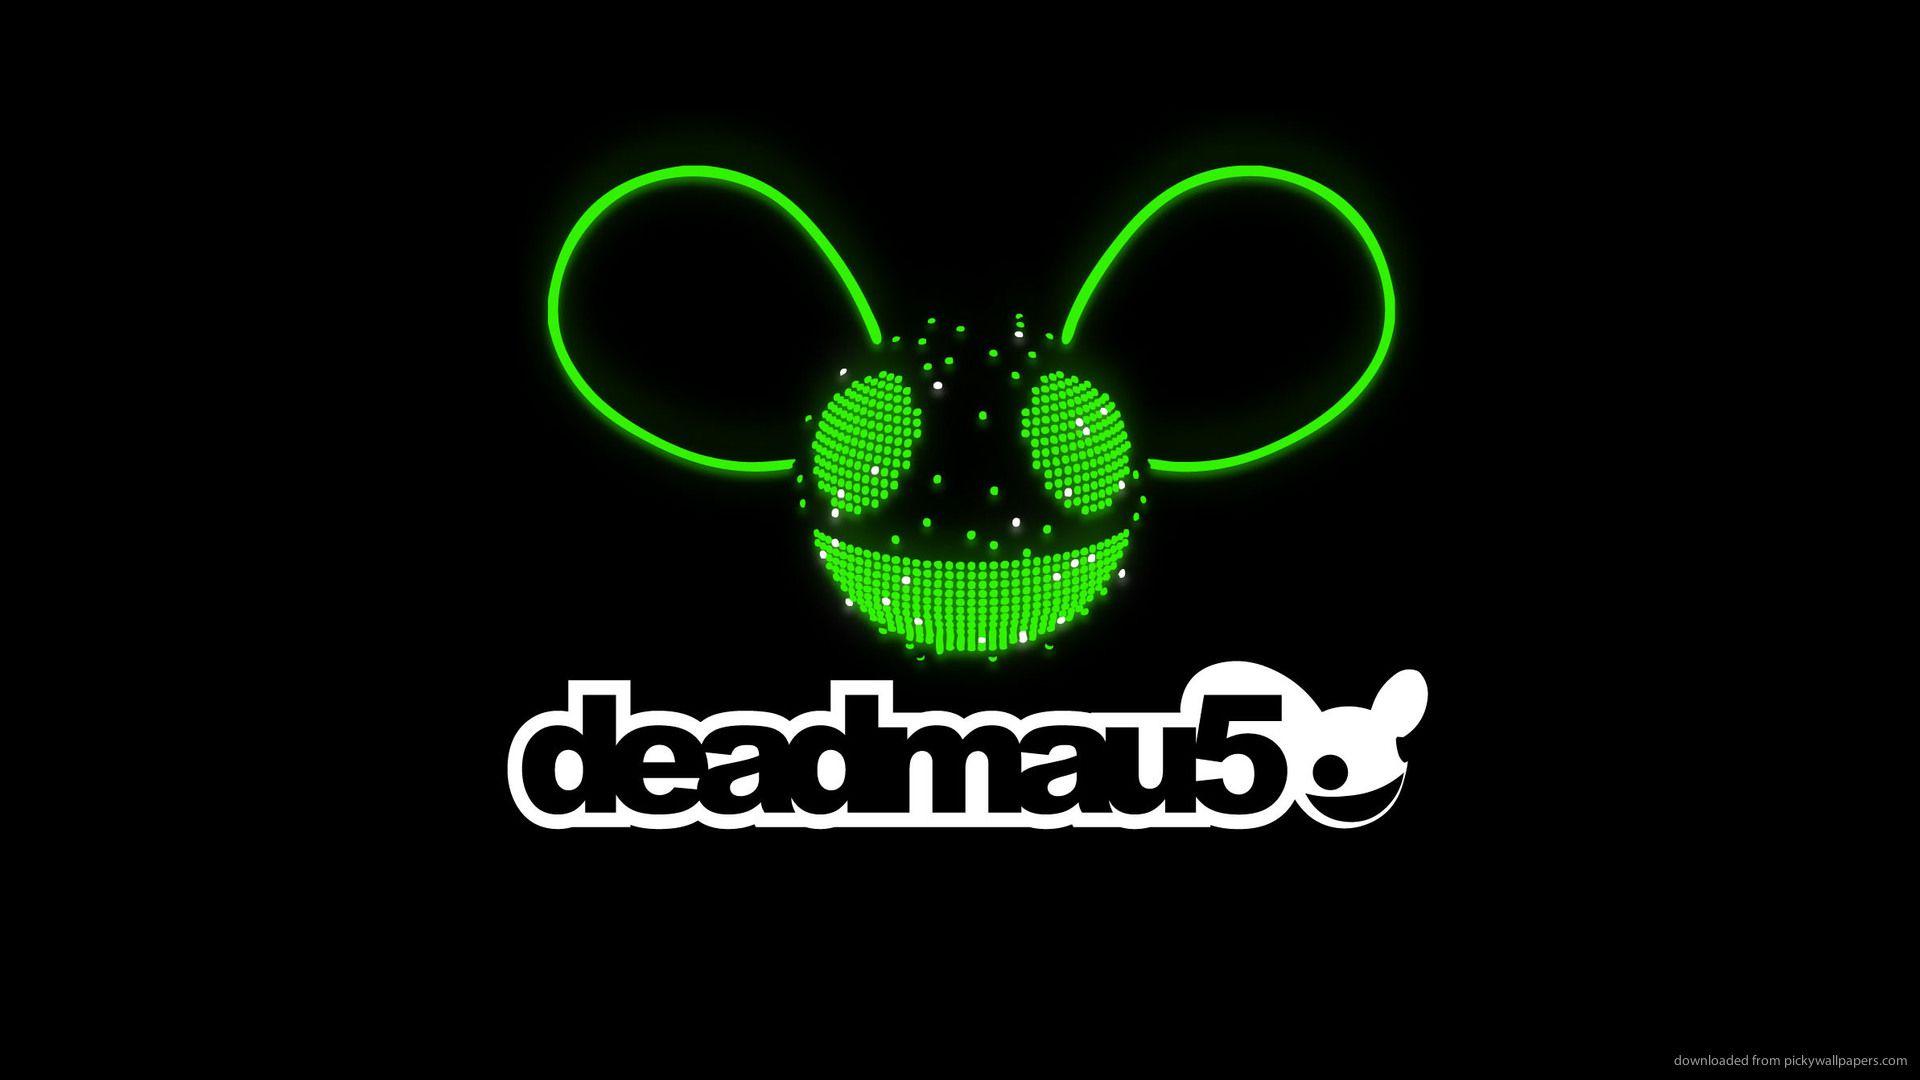 Deadmau5 Logo HD Wallpaper, Background Image